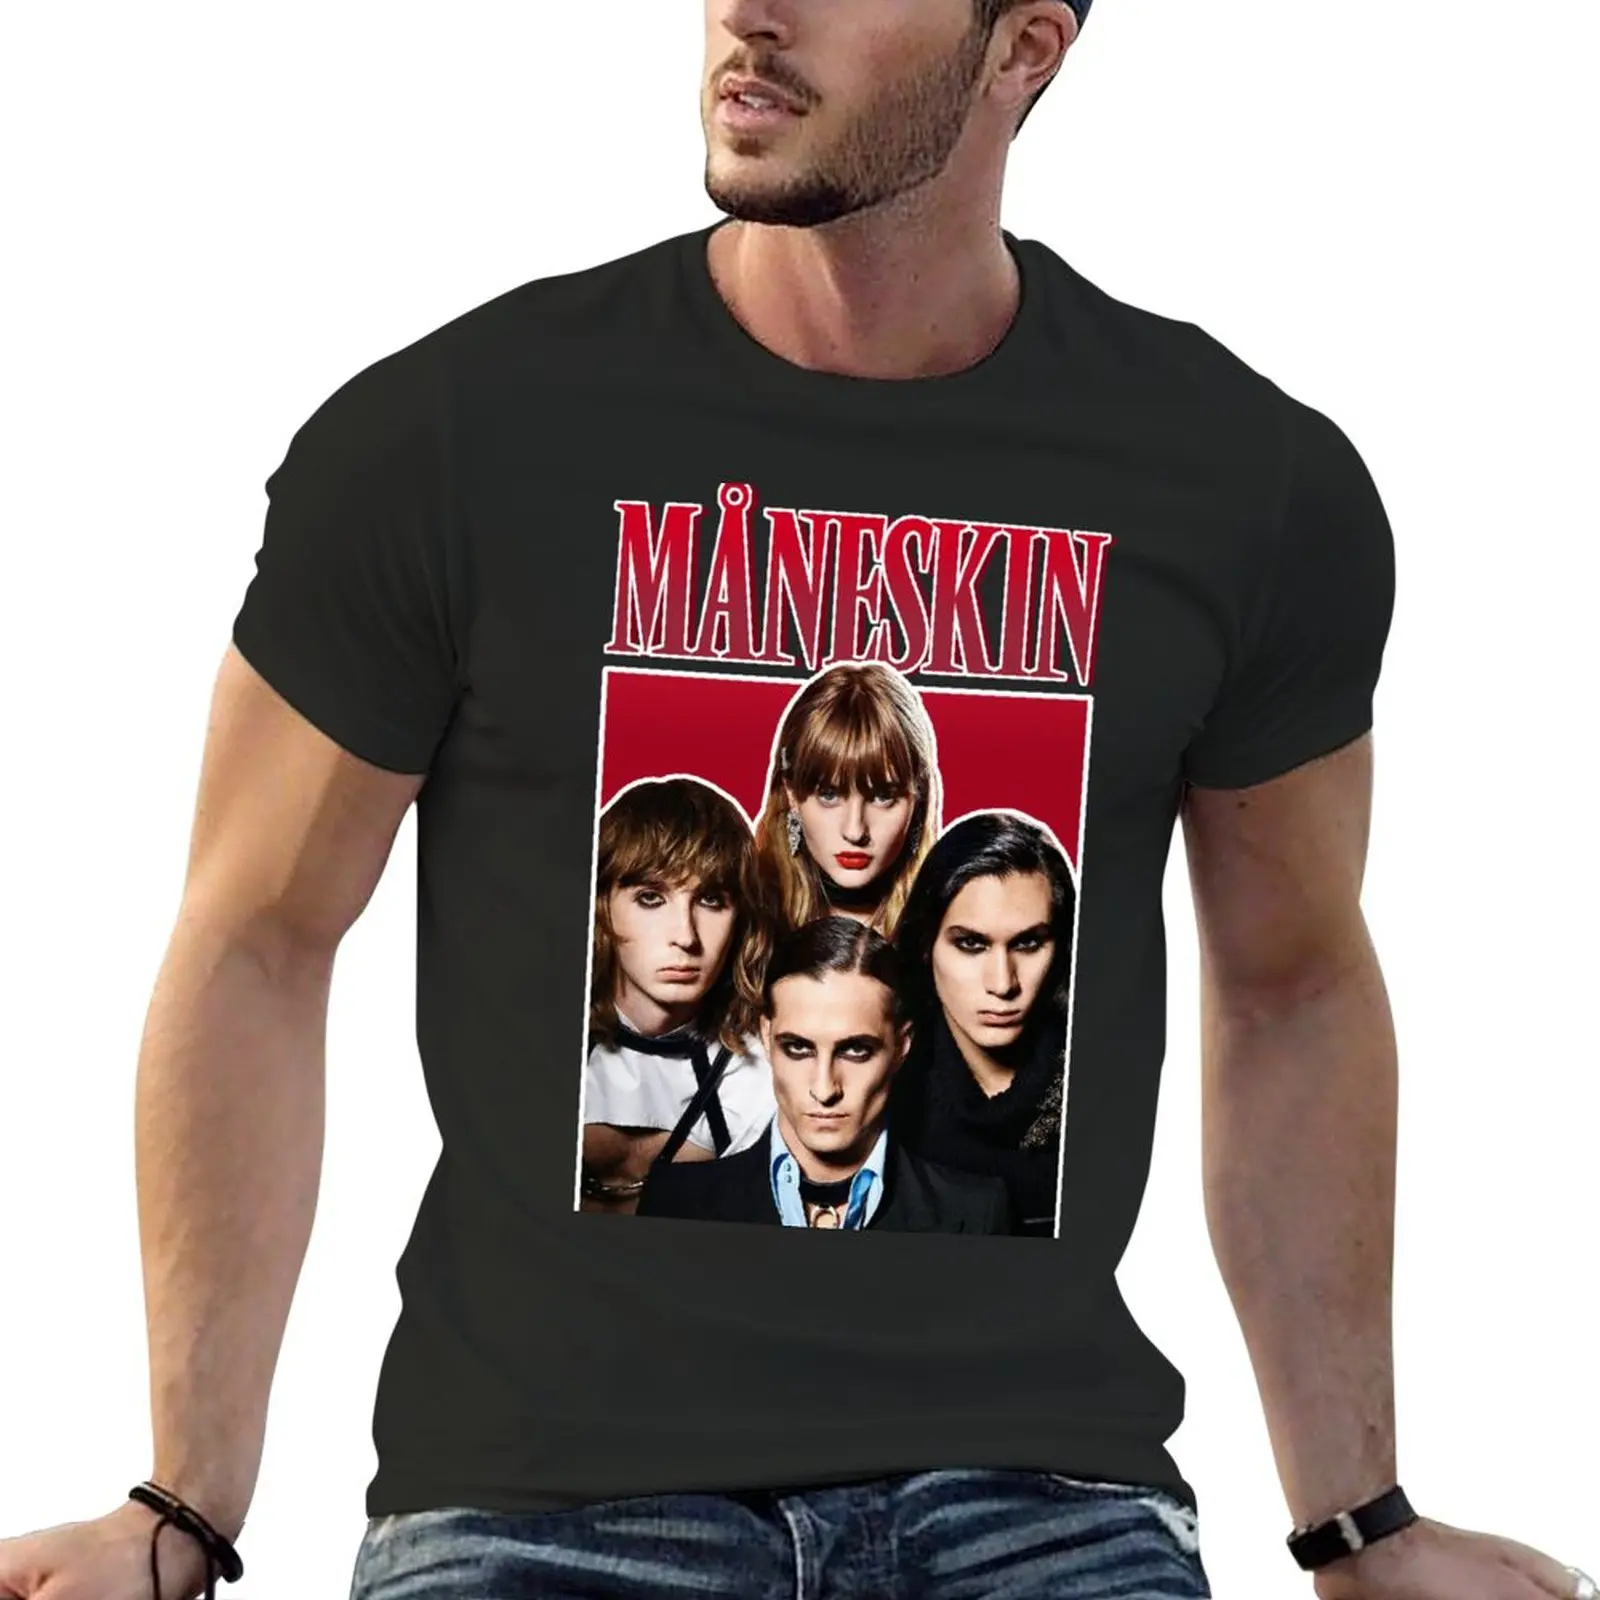 

New Maneskin Mneskin - Winners of Eurovision Song Contest 2021 Italy Zitti E Buoni Retro Vintage T-Shirt